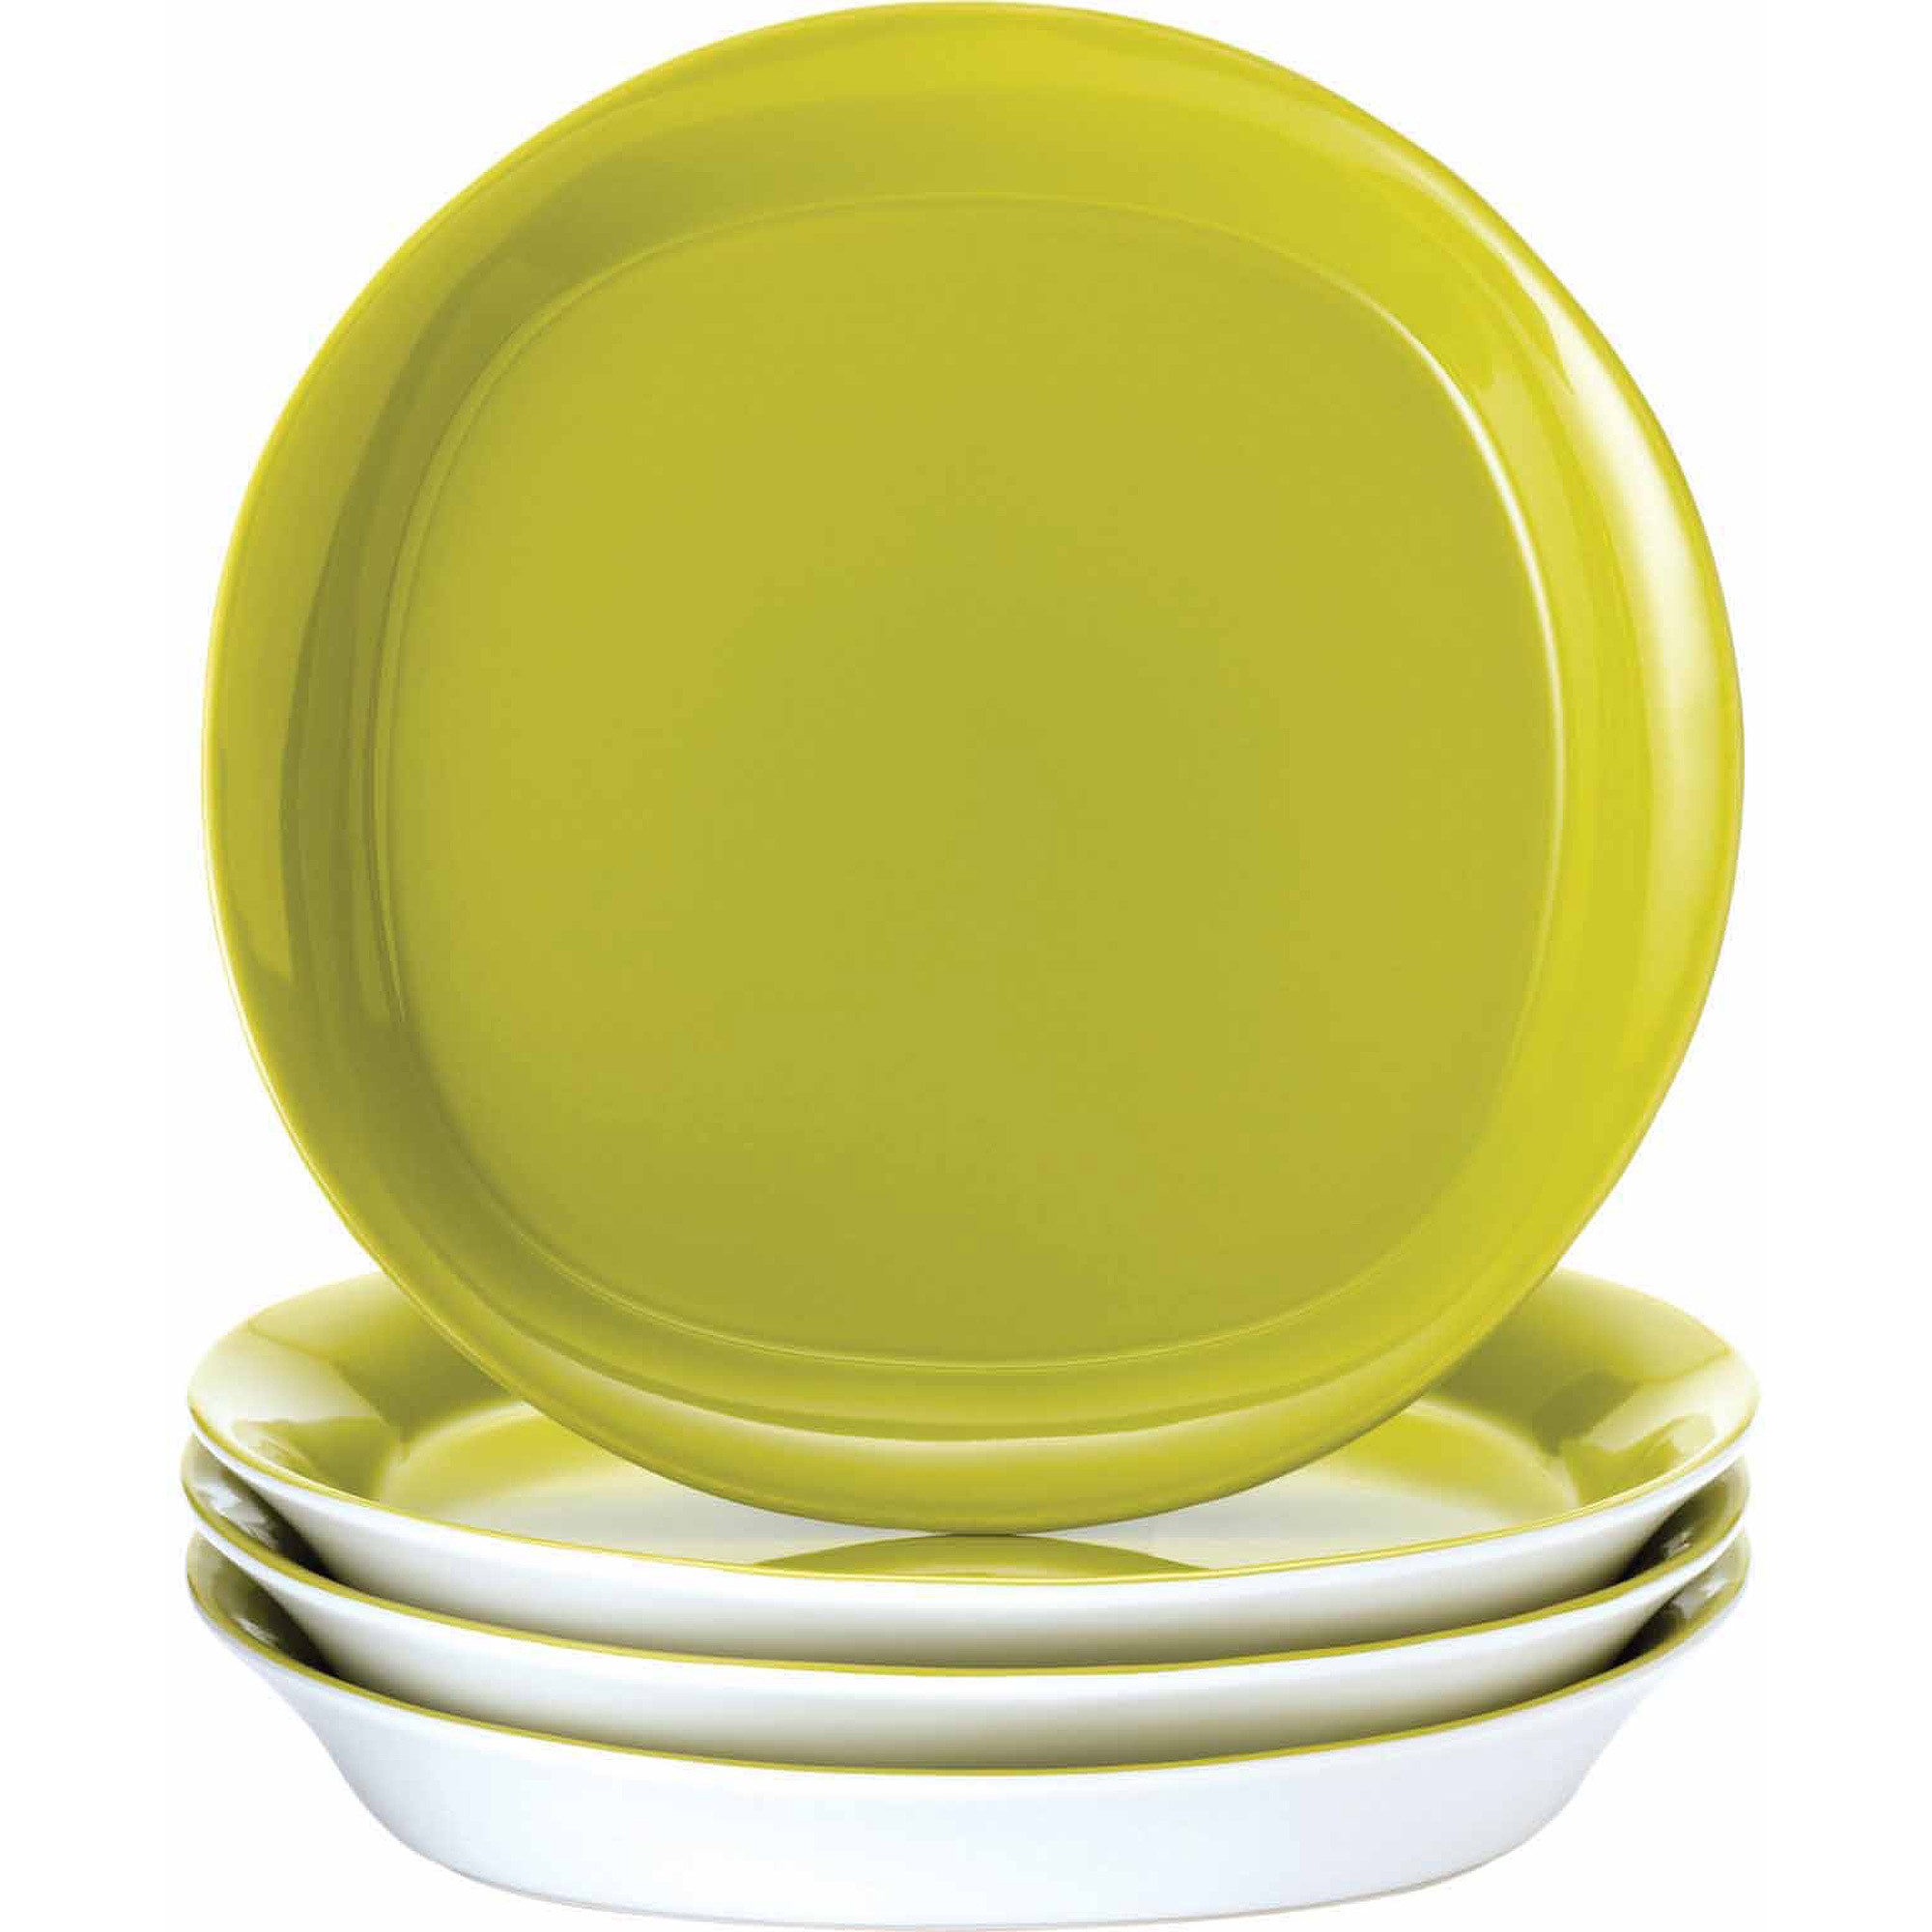 Walmart Dinner Plates
 Better Homes and Gardens Jade Crackle Square Dinner Plate